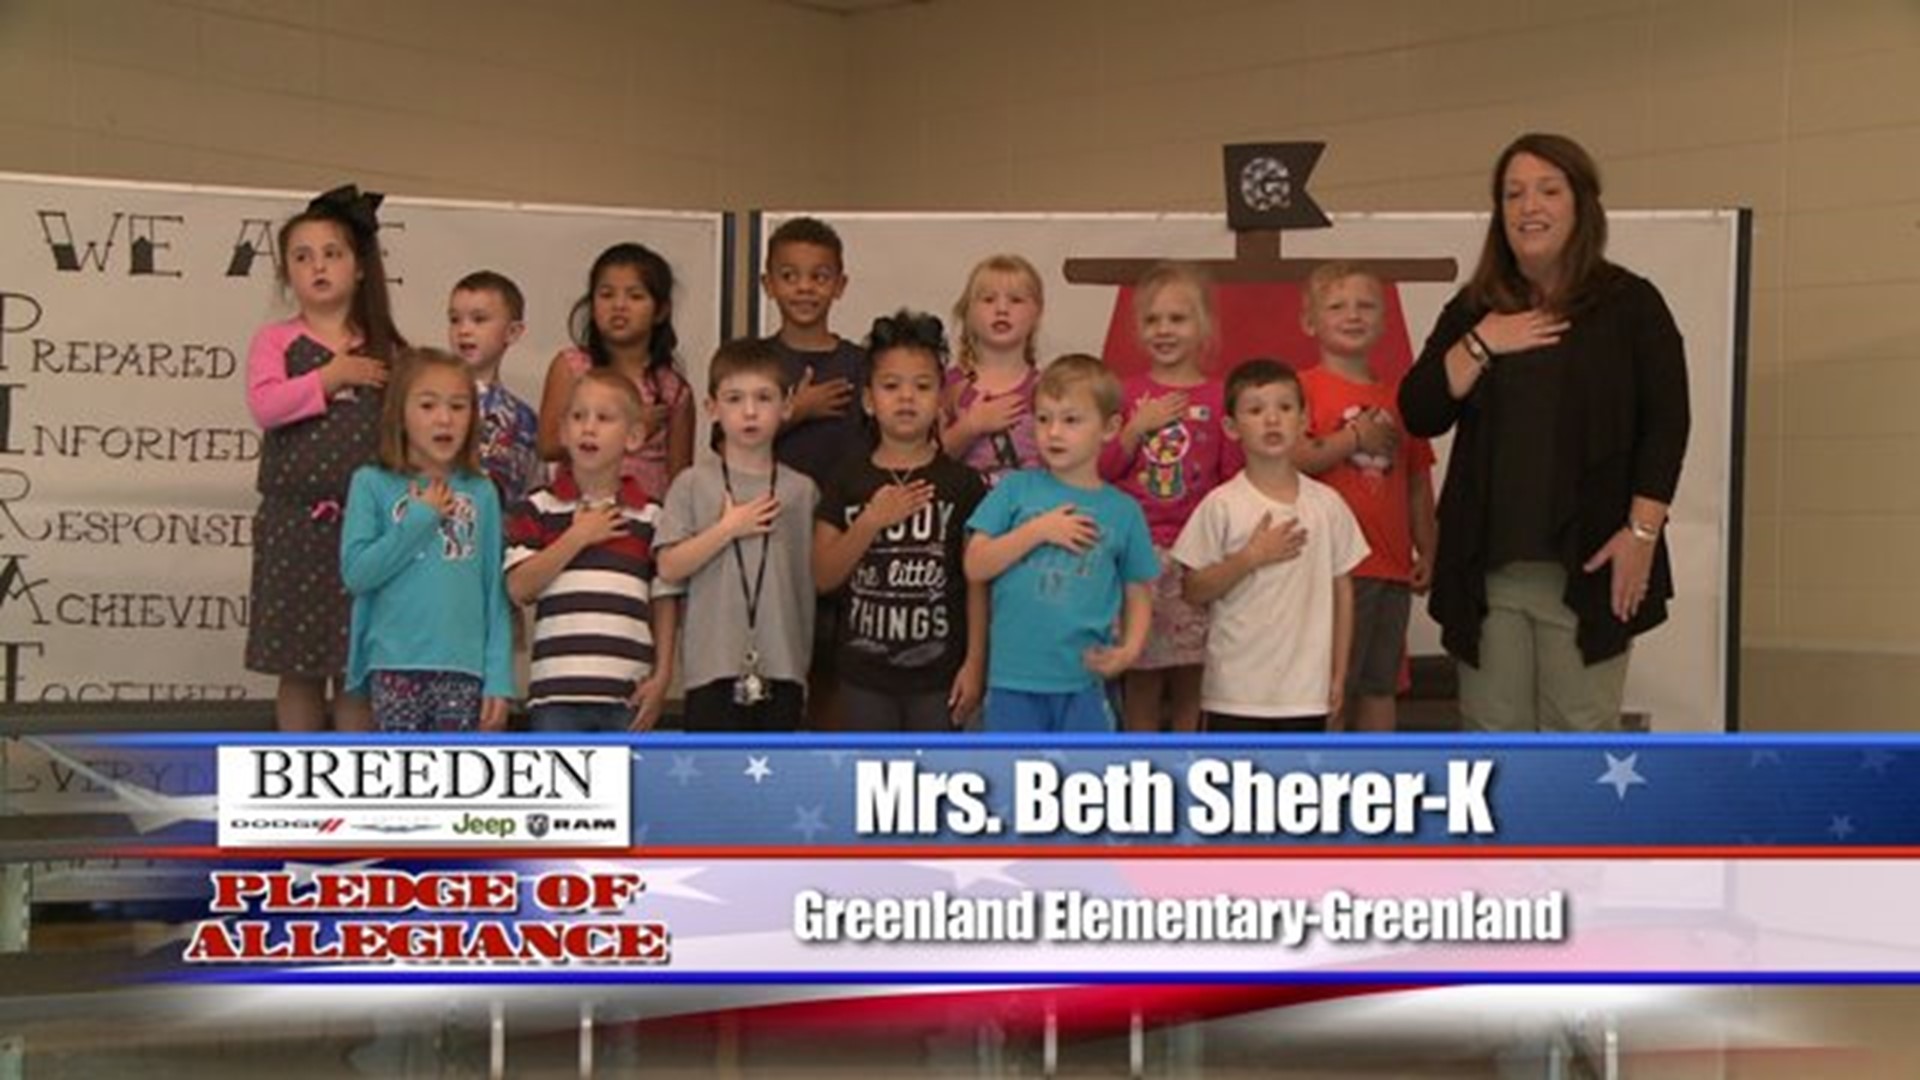 Greenland Elementary, Greenland - Mrs. Beth Sherer - Kindergarten